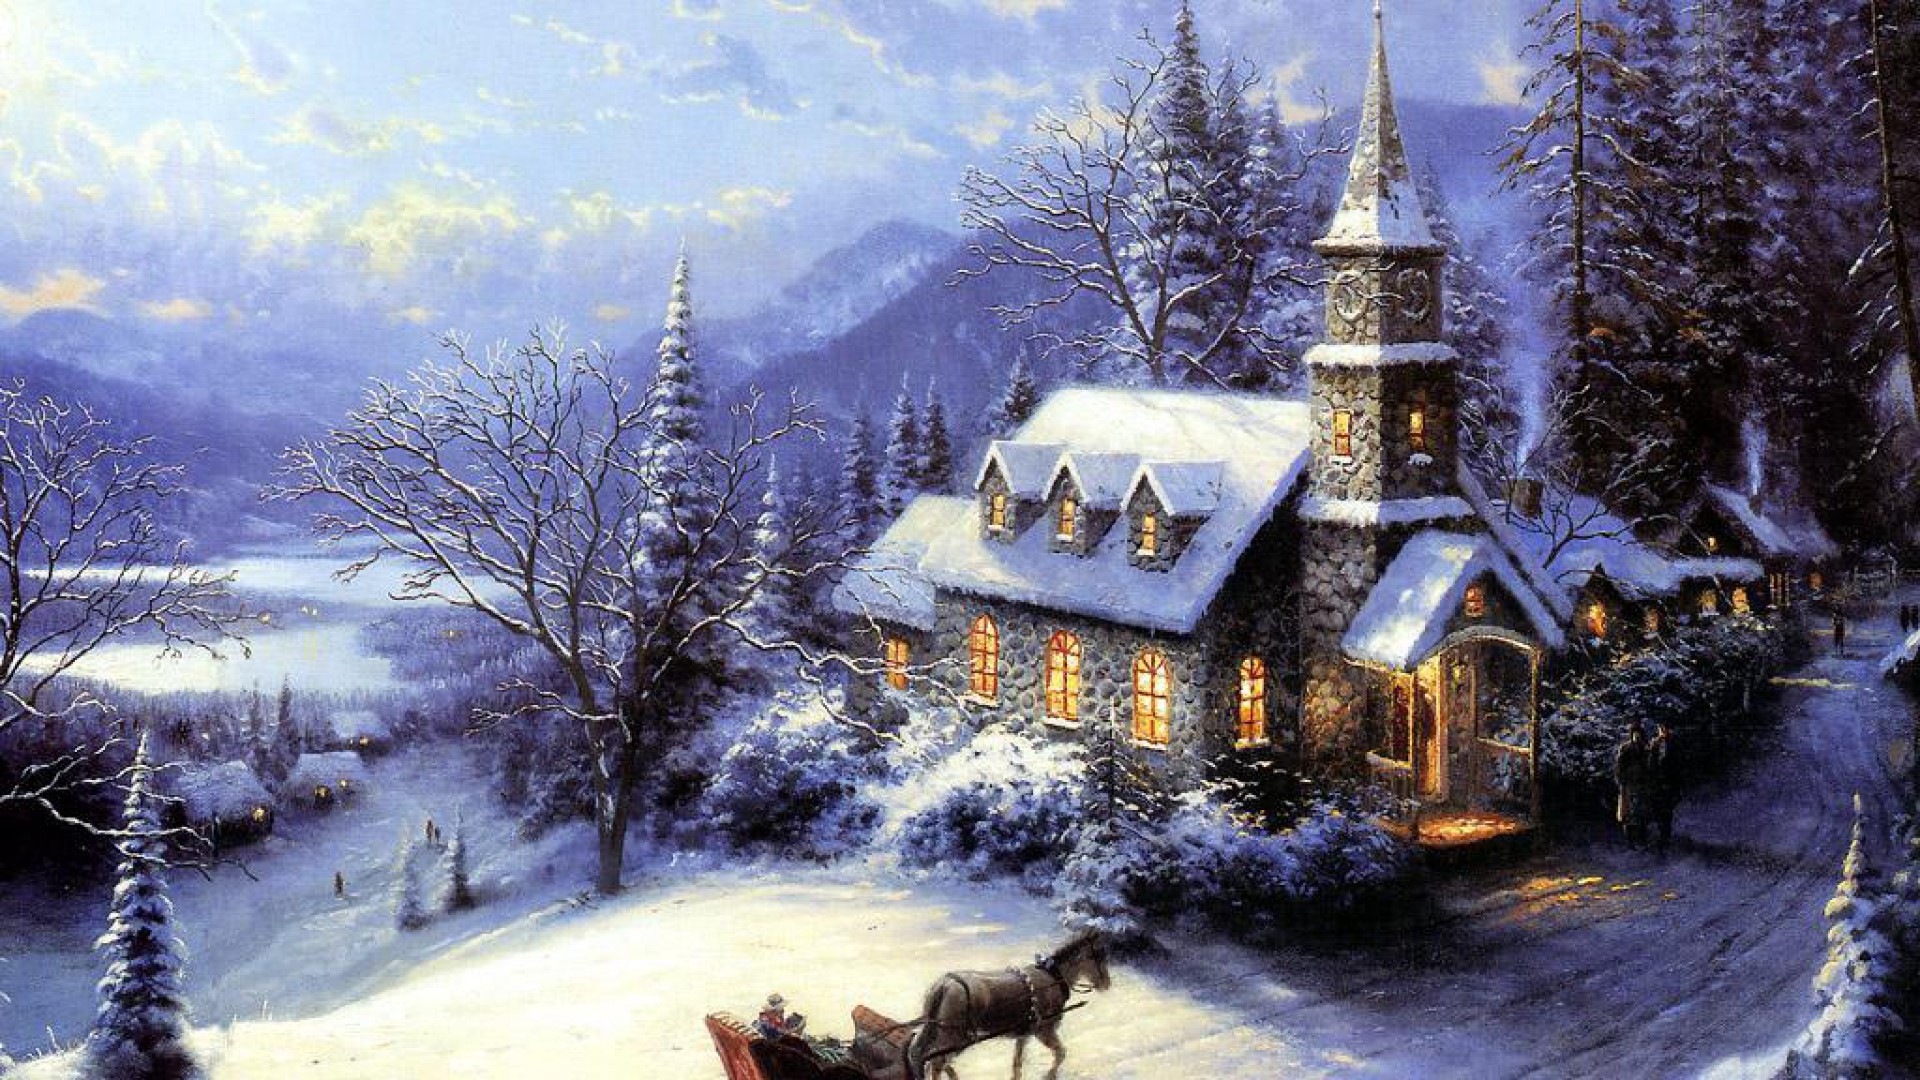 Christmas Winter 1080p HD Wallpaper